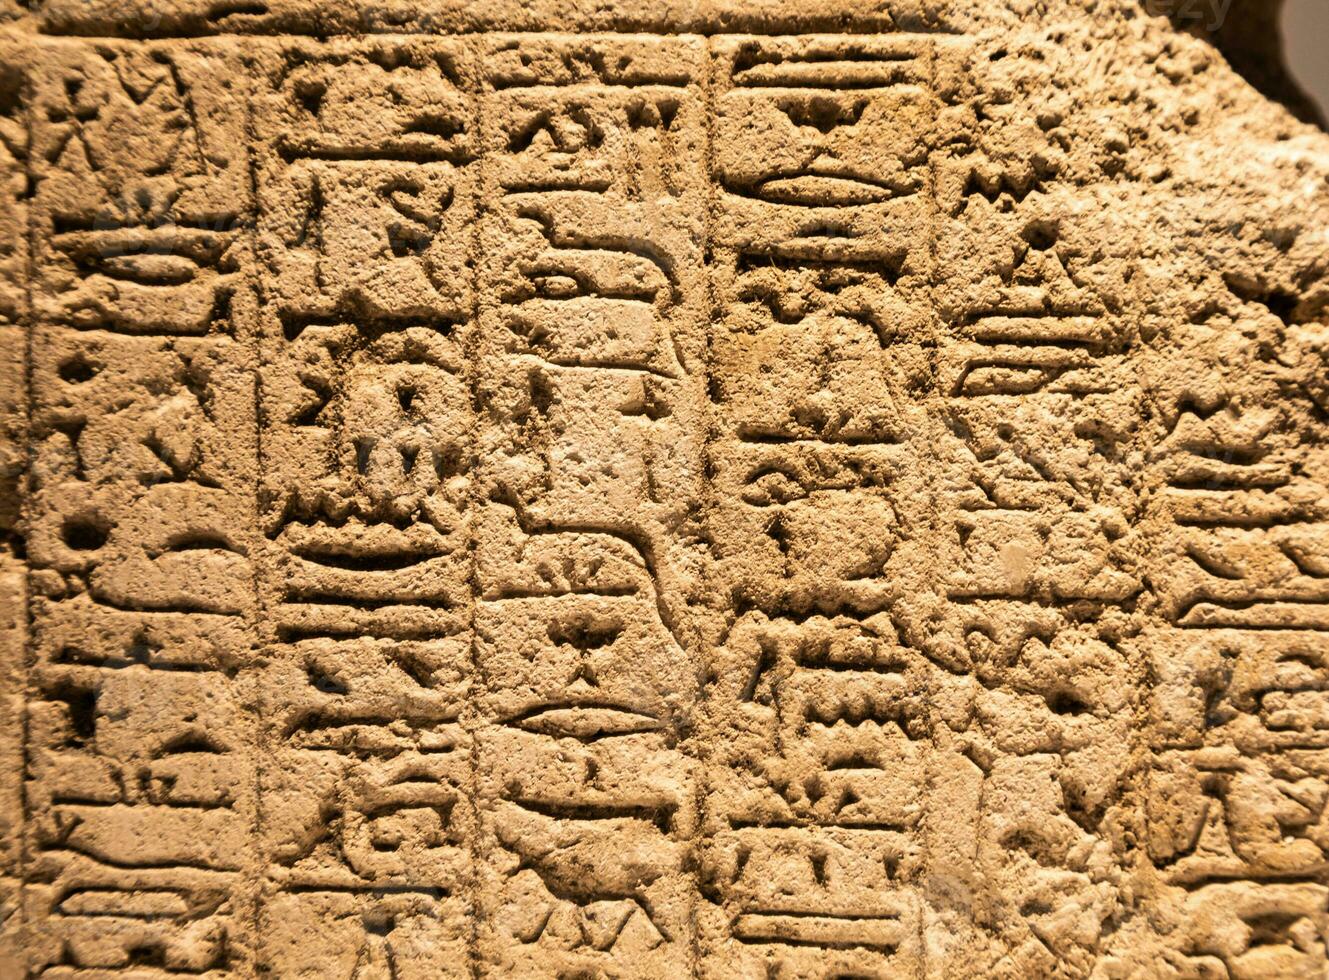 égyptien hiéroglyphes. ancien Contexte photo